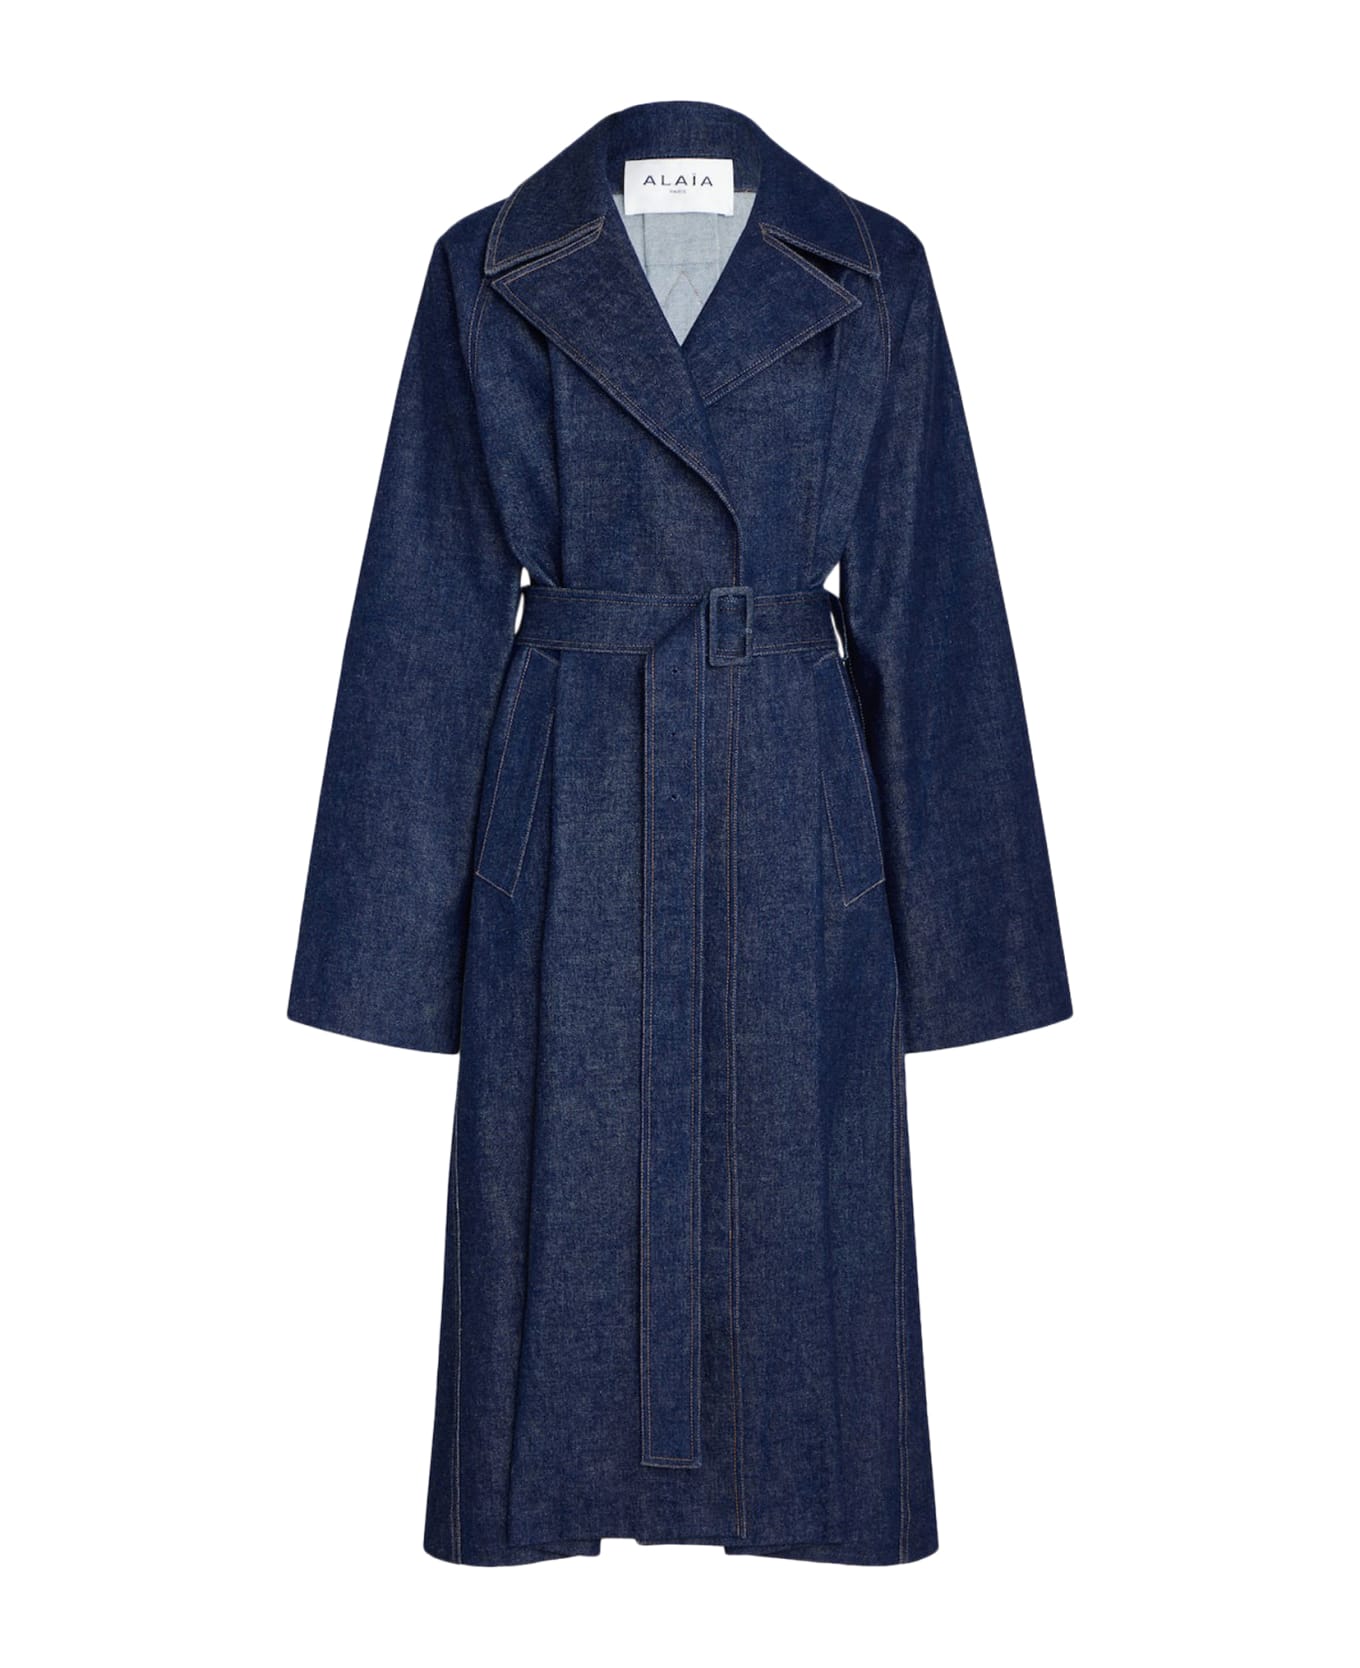 Alaia Belted Coat - Bleu Denim コート